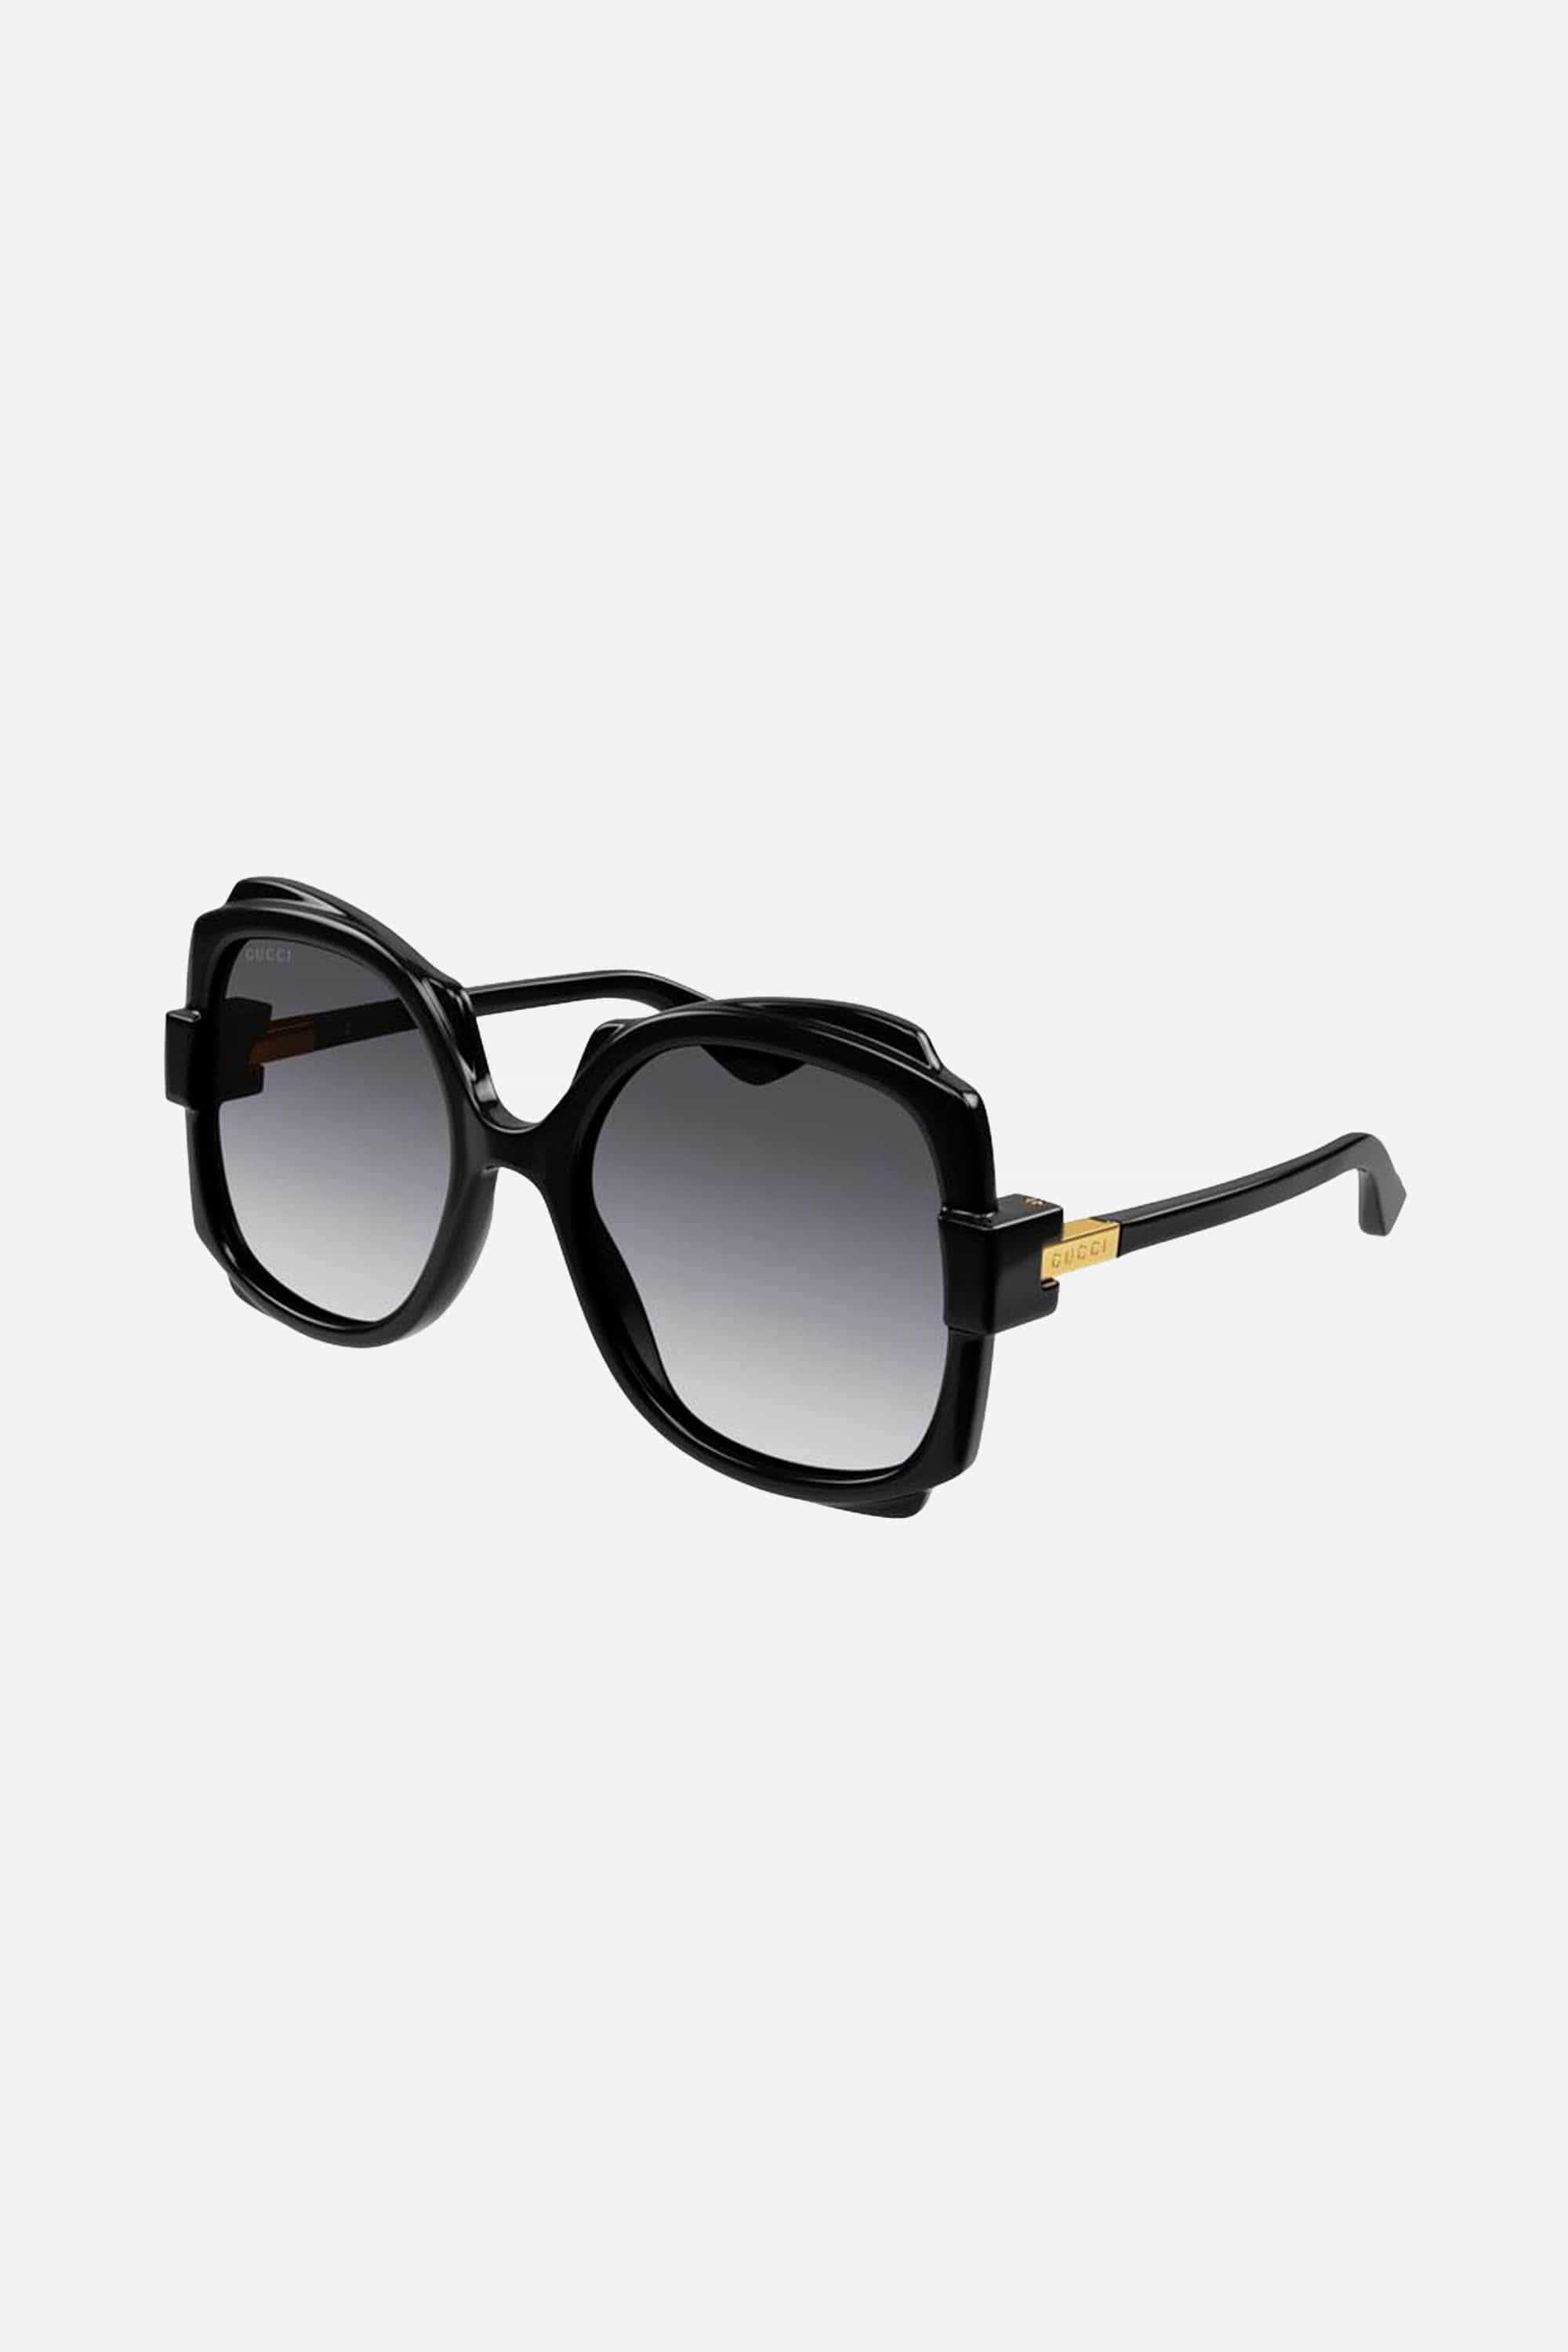 Gucci black butterfly shape sunglasses - Eyewear Club